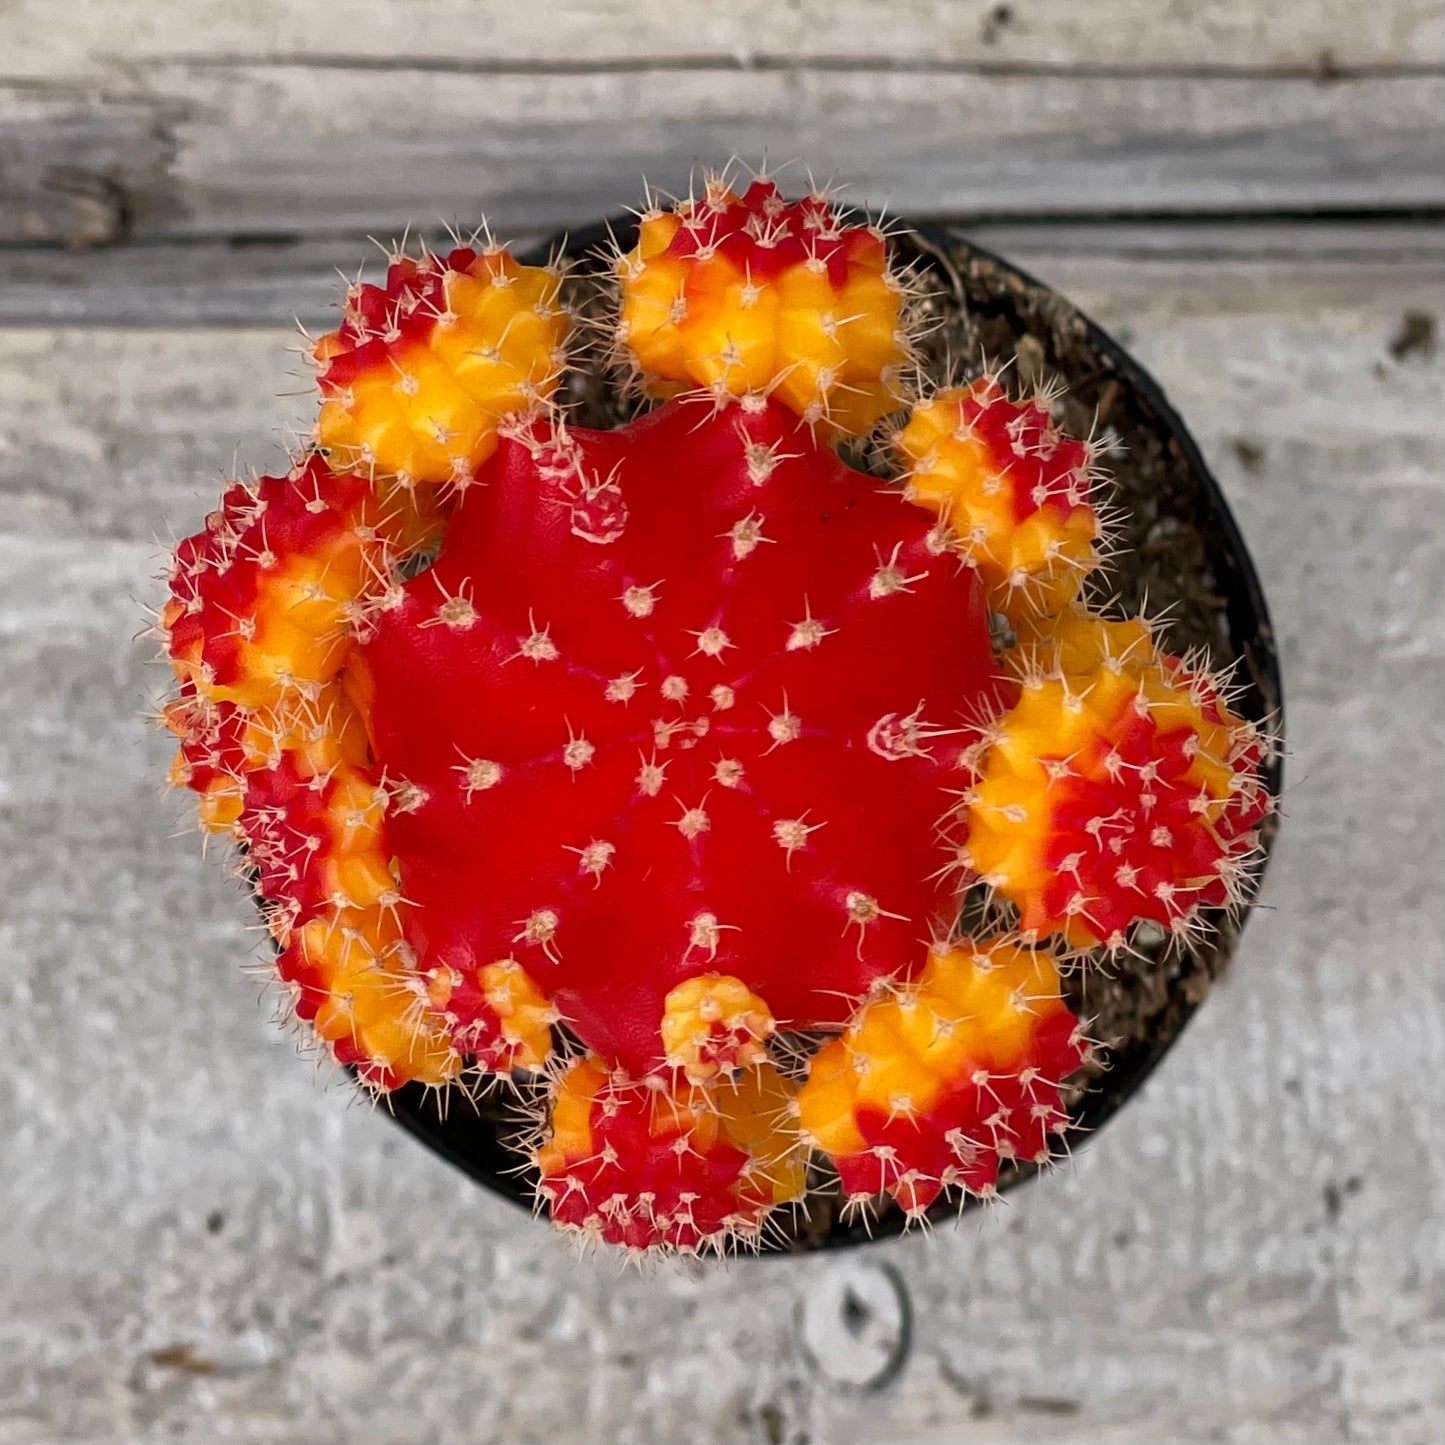 2.5” Moon Cactus- Grafted Gymnocalycium Friedrichii